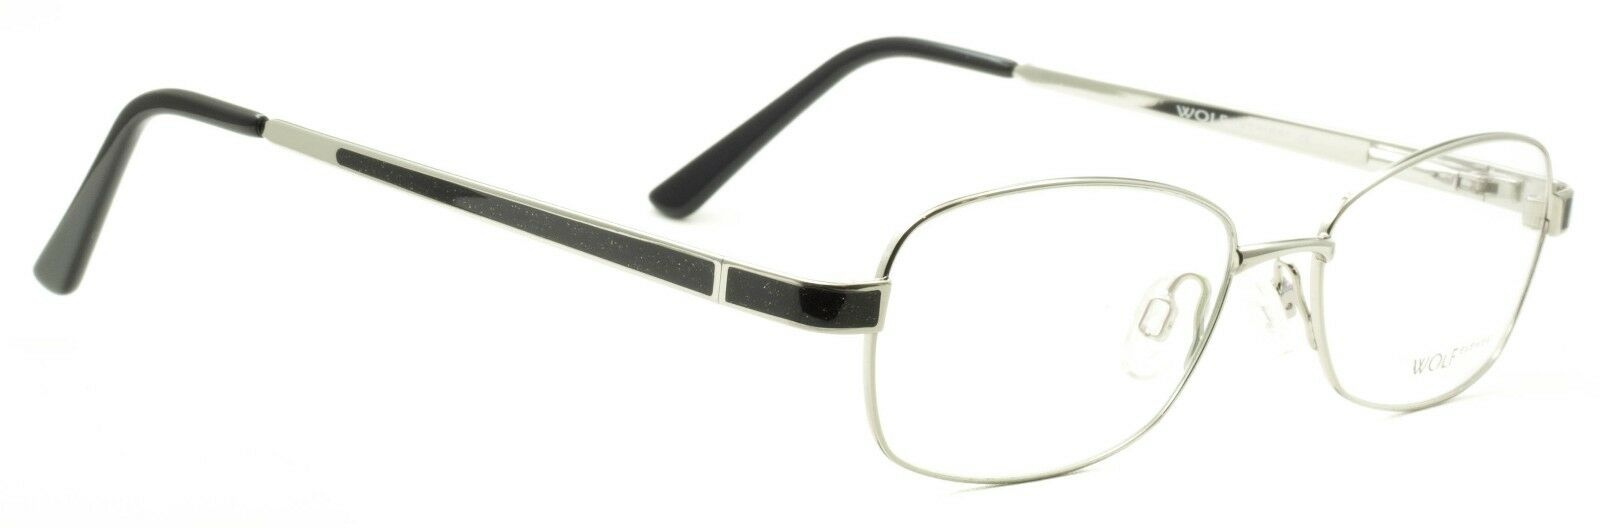 WOLF EYEWEAR 1007 C50 FRAMES RX Optical Glasses Eyeglasses Eyewear New - TRUSTED